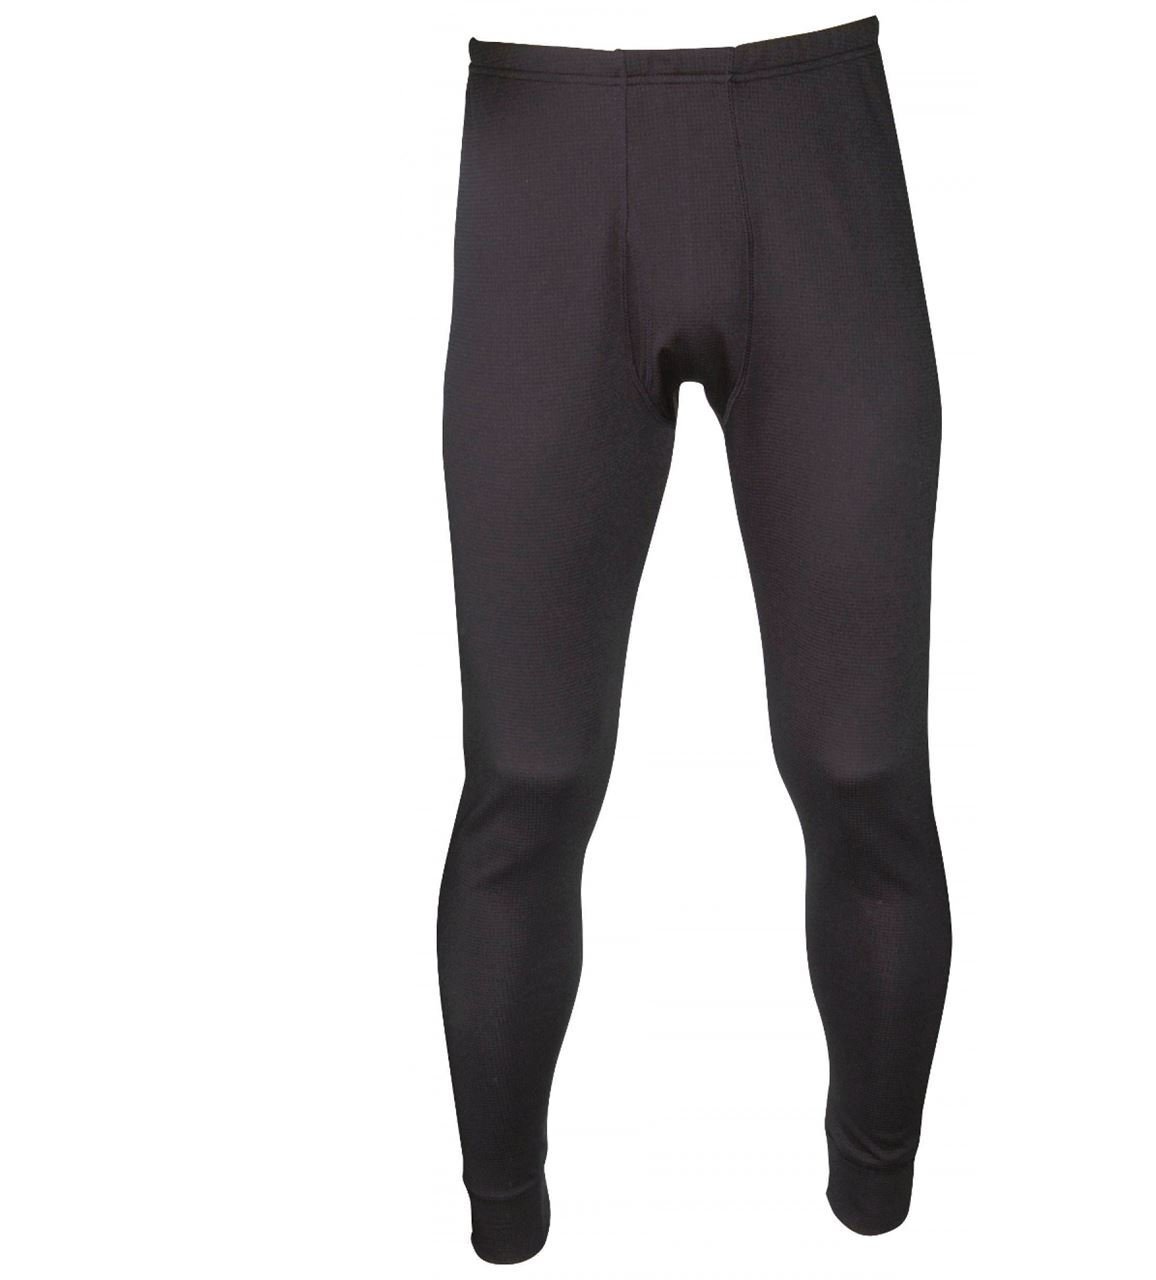 Blackrock Thermal Baselayer leggings £13 - Chorley Workwear